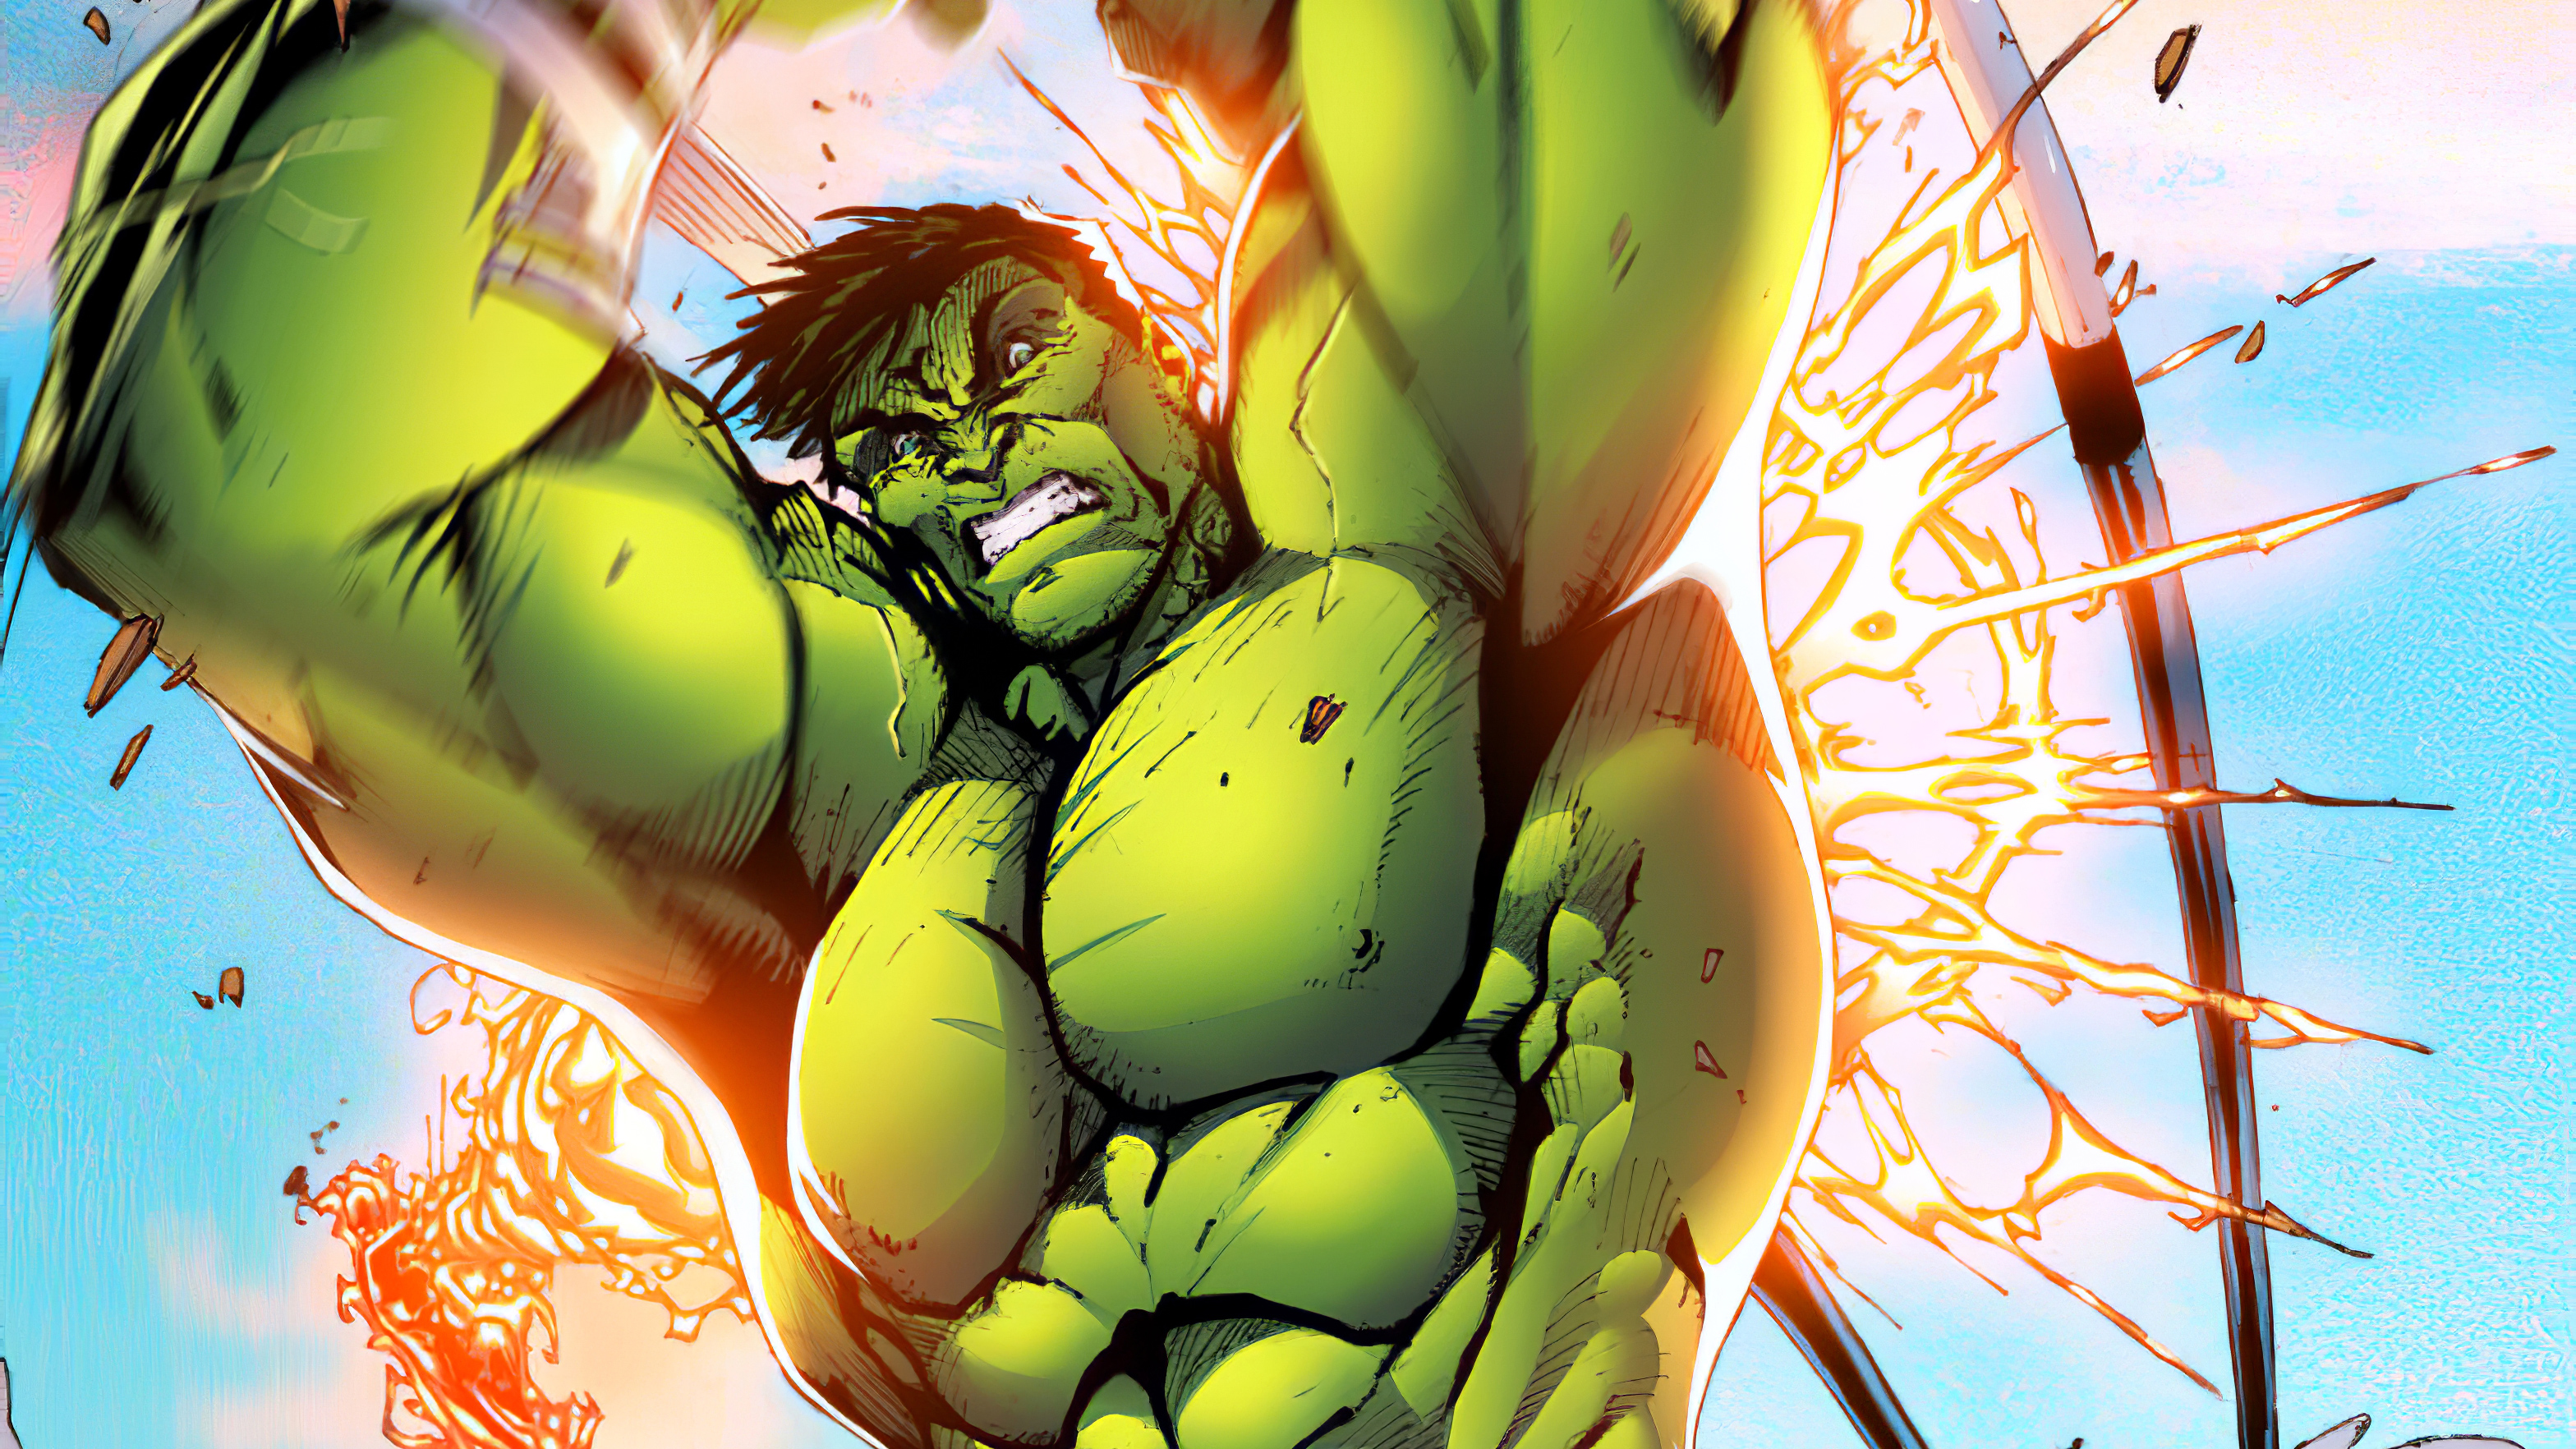 3136X1764 Hulk Smash Boy, HD Superheroes, 4k Wallpapers, Images, Background...